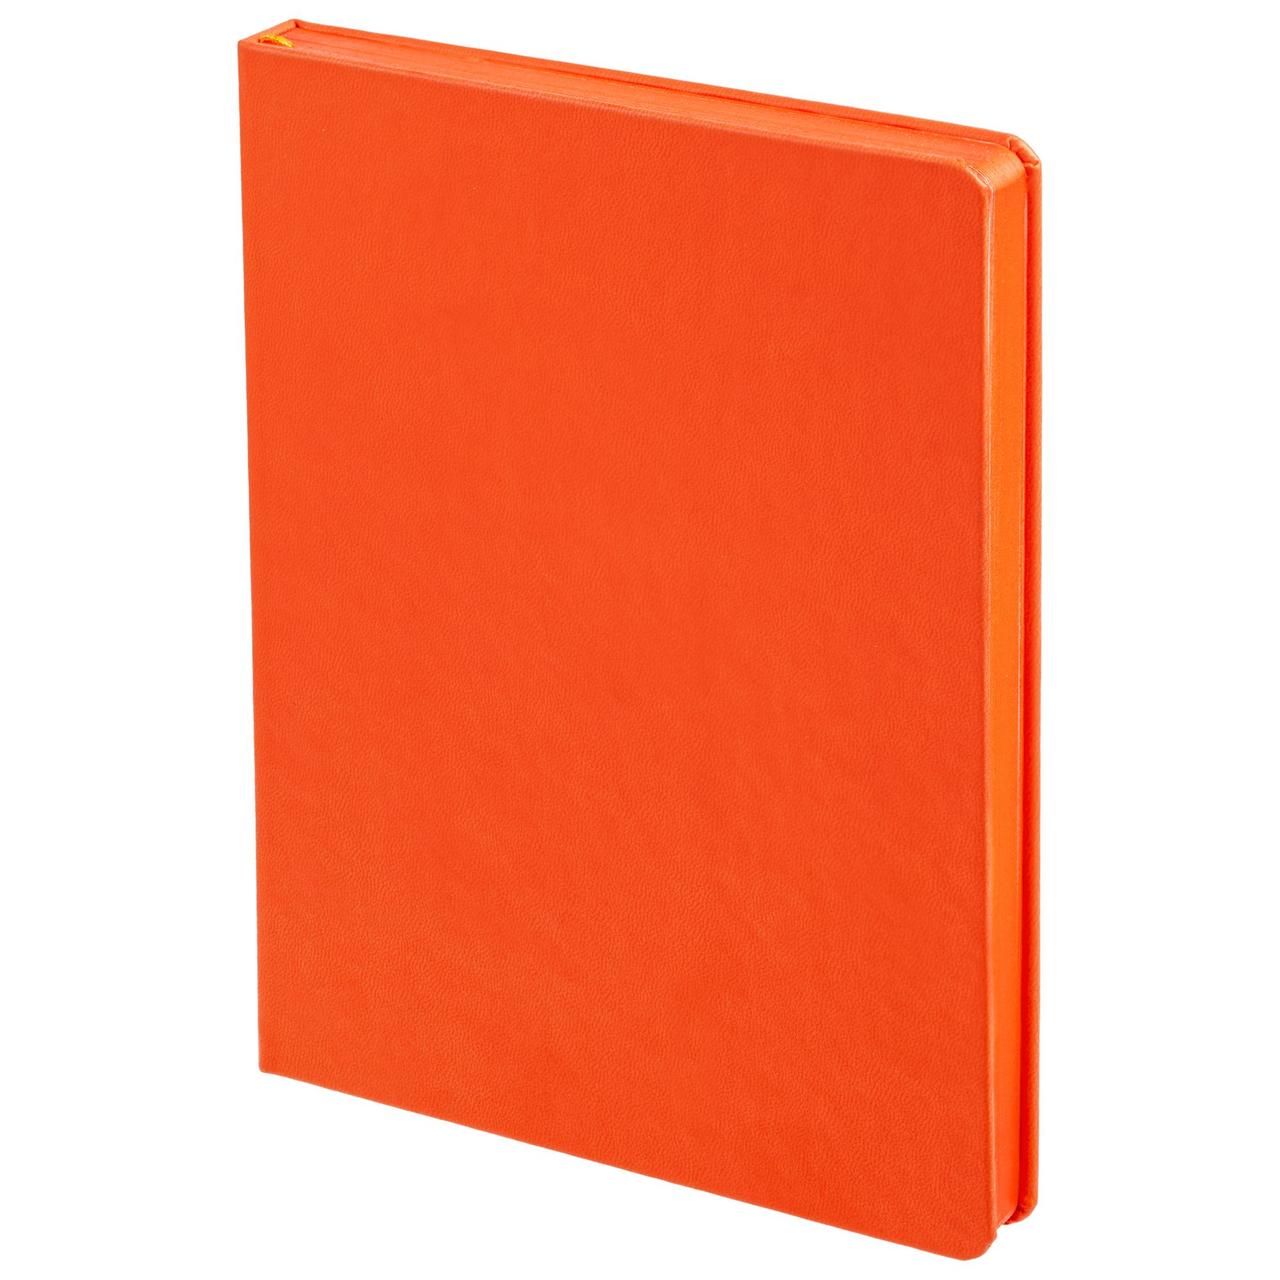 Ежедневник Brand Tone, недатированный, оранжевый (артикул 17882.20), фото 1